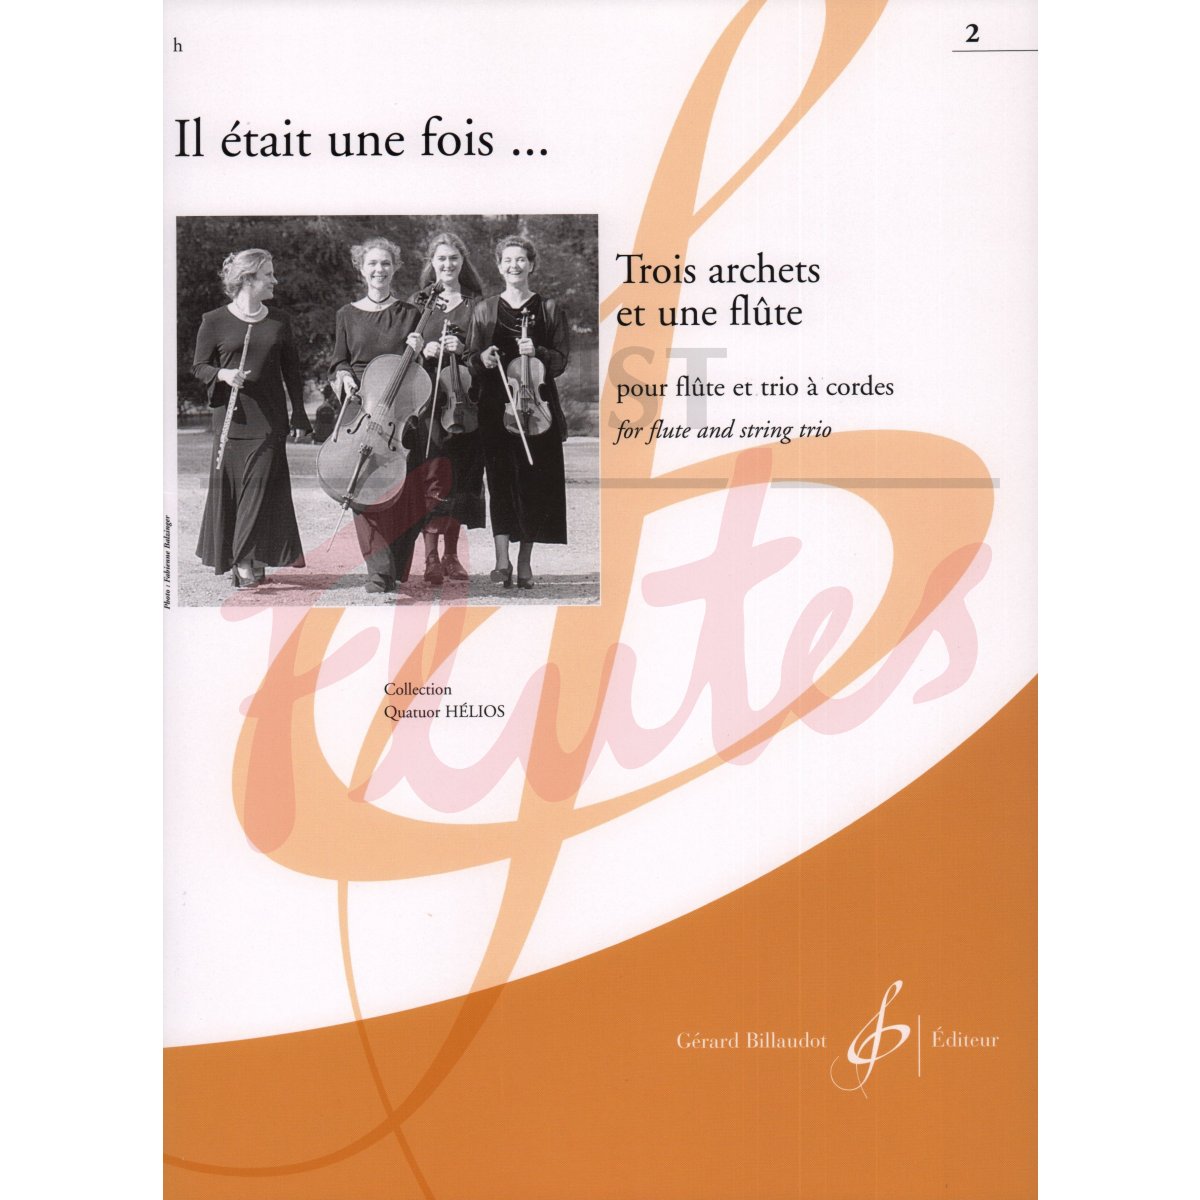 Once Upon a Time -Il etait une fois... for Flute, Violin, Viola and Cello  Vol. 2